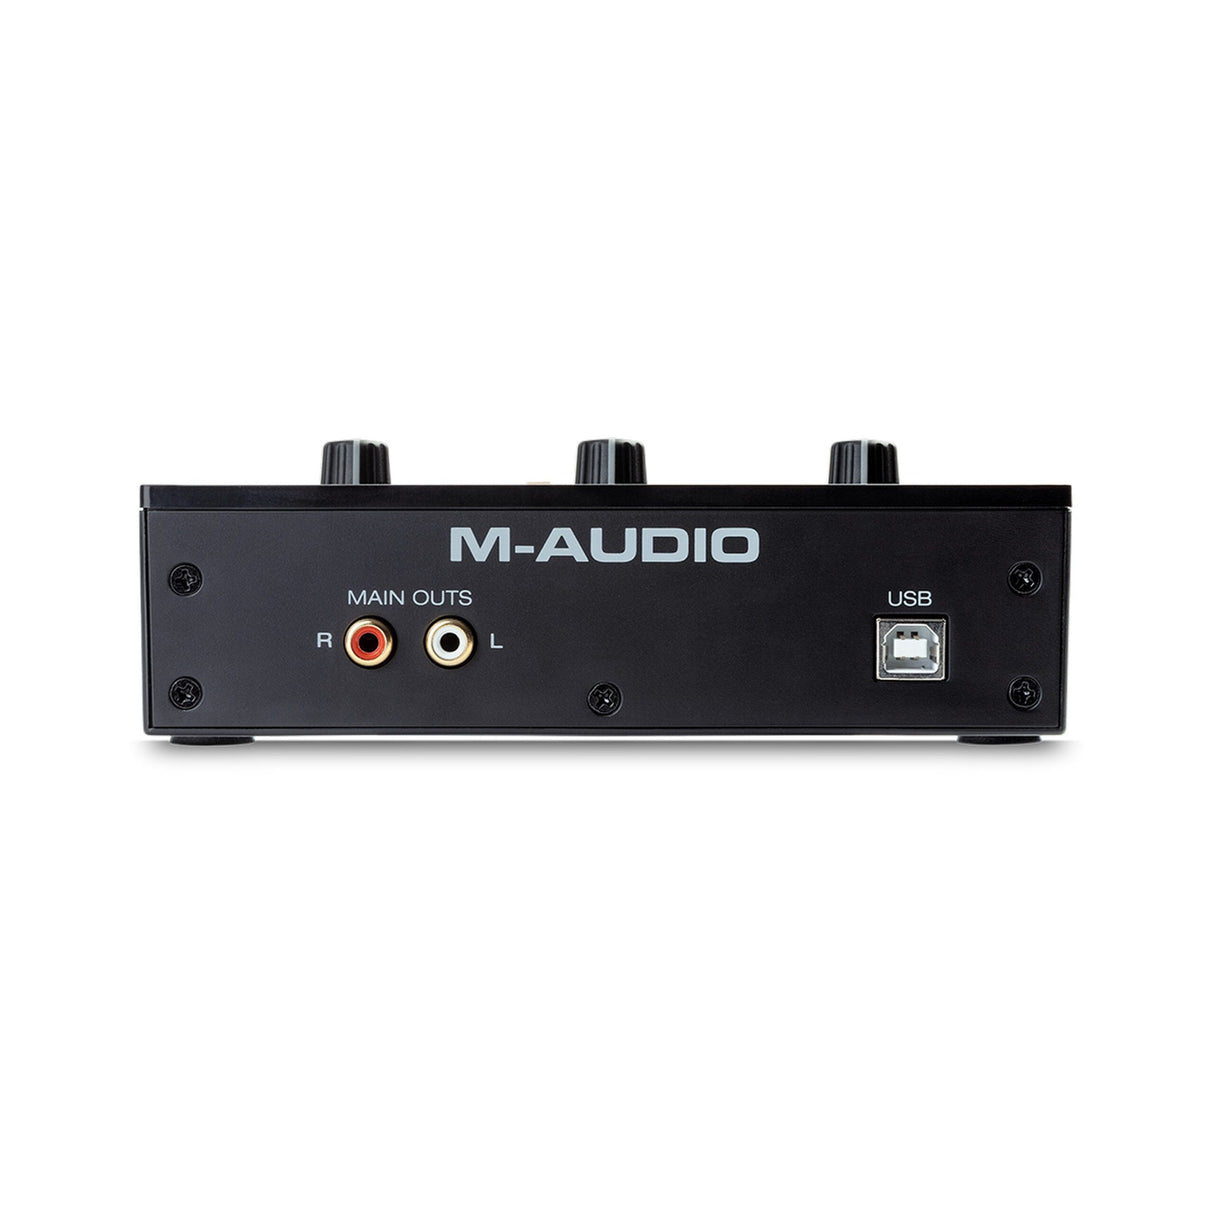 M-Audio M-Track Solo 48 KHz, 2-Channel USB Audio Interface